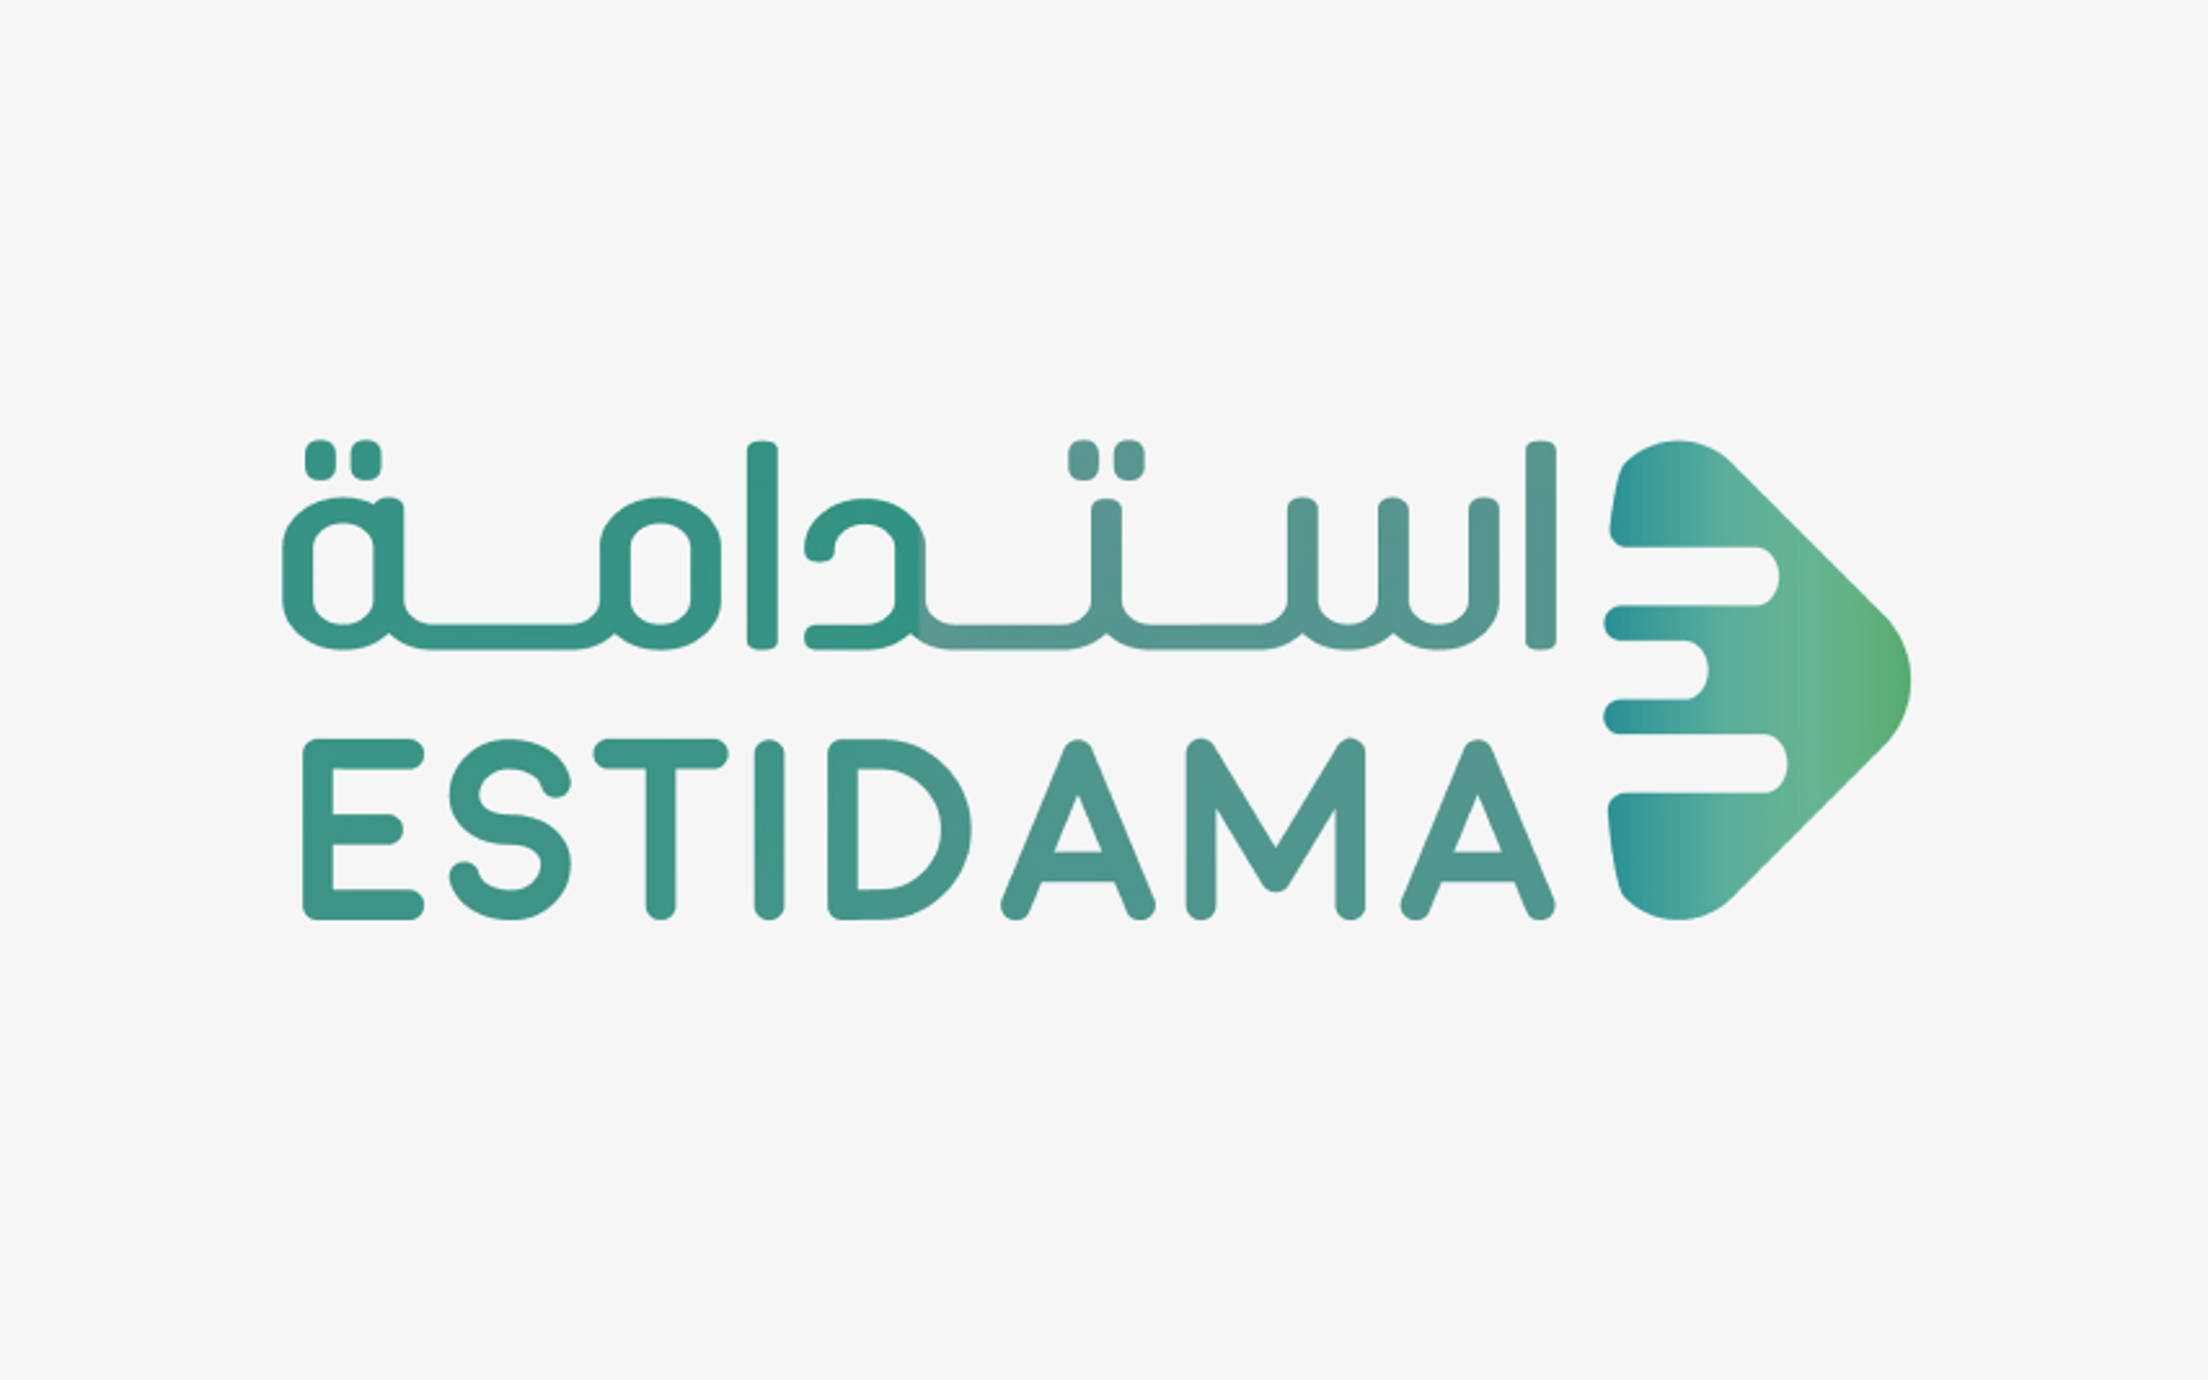 ESTIDAMA logo on gray background